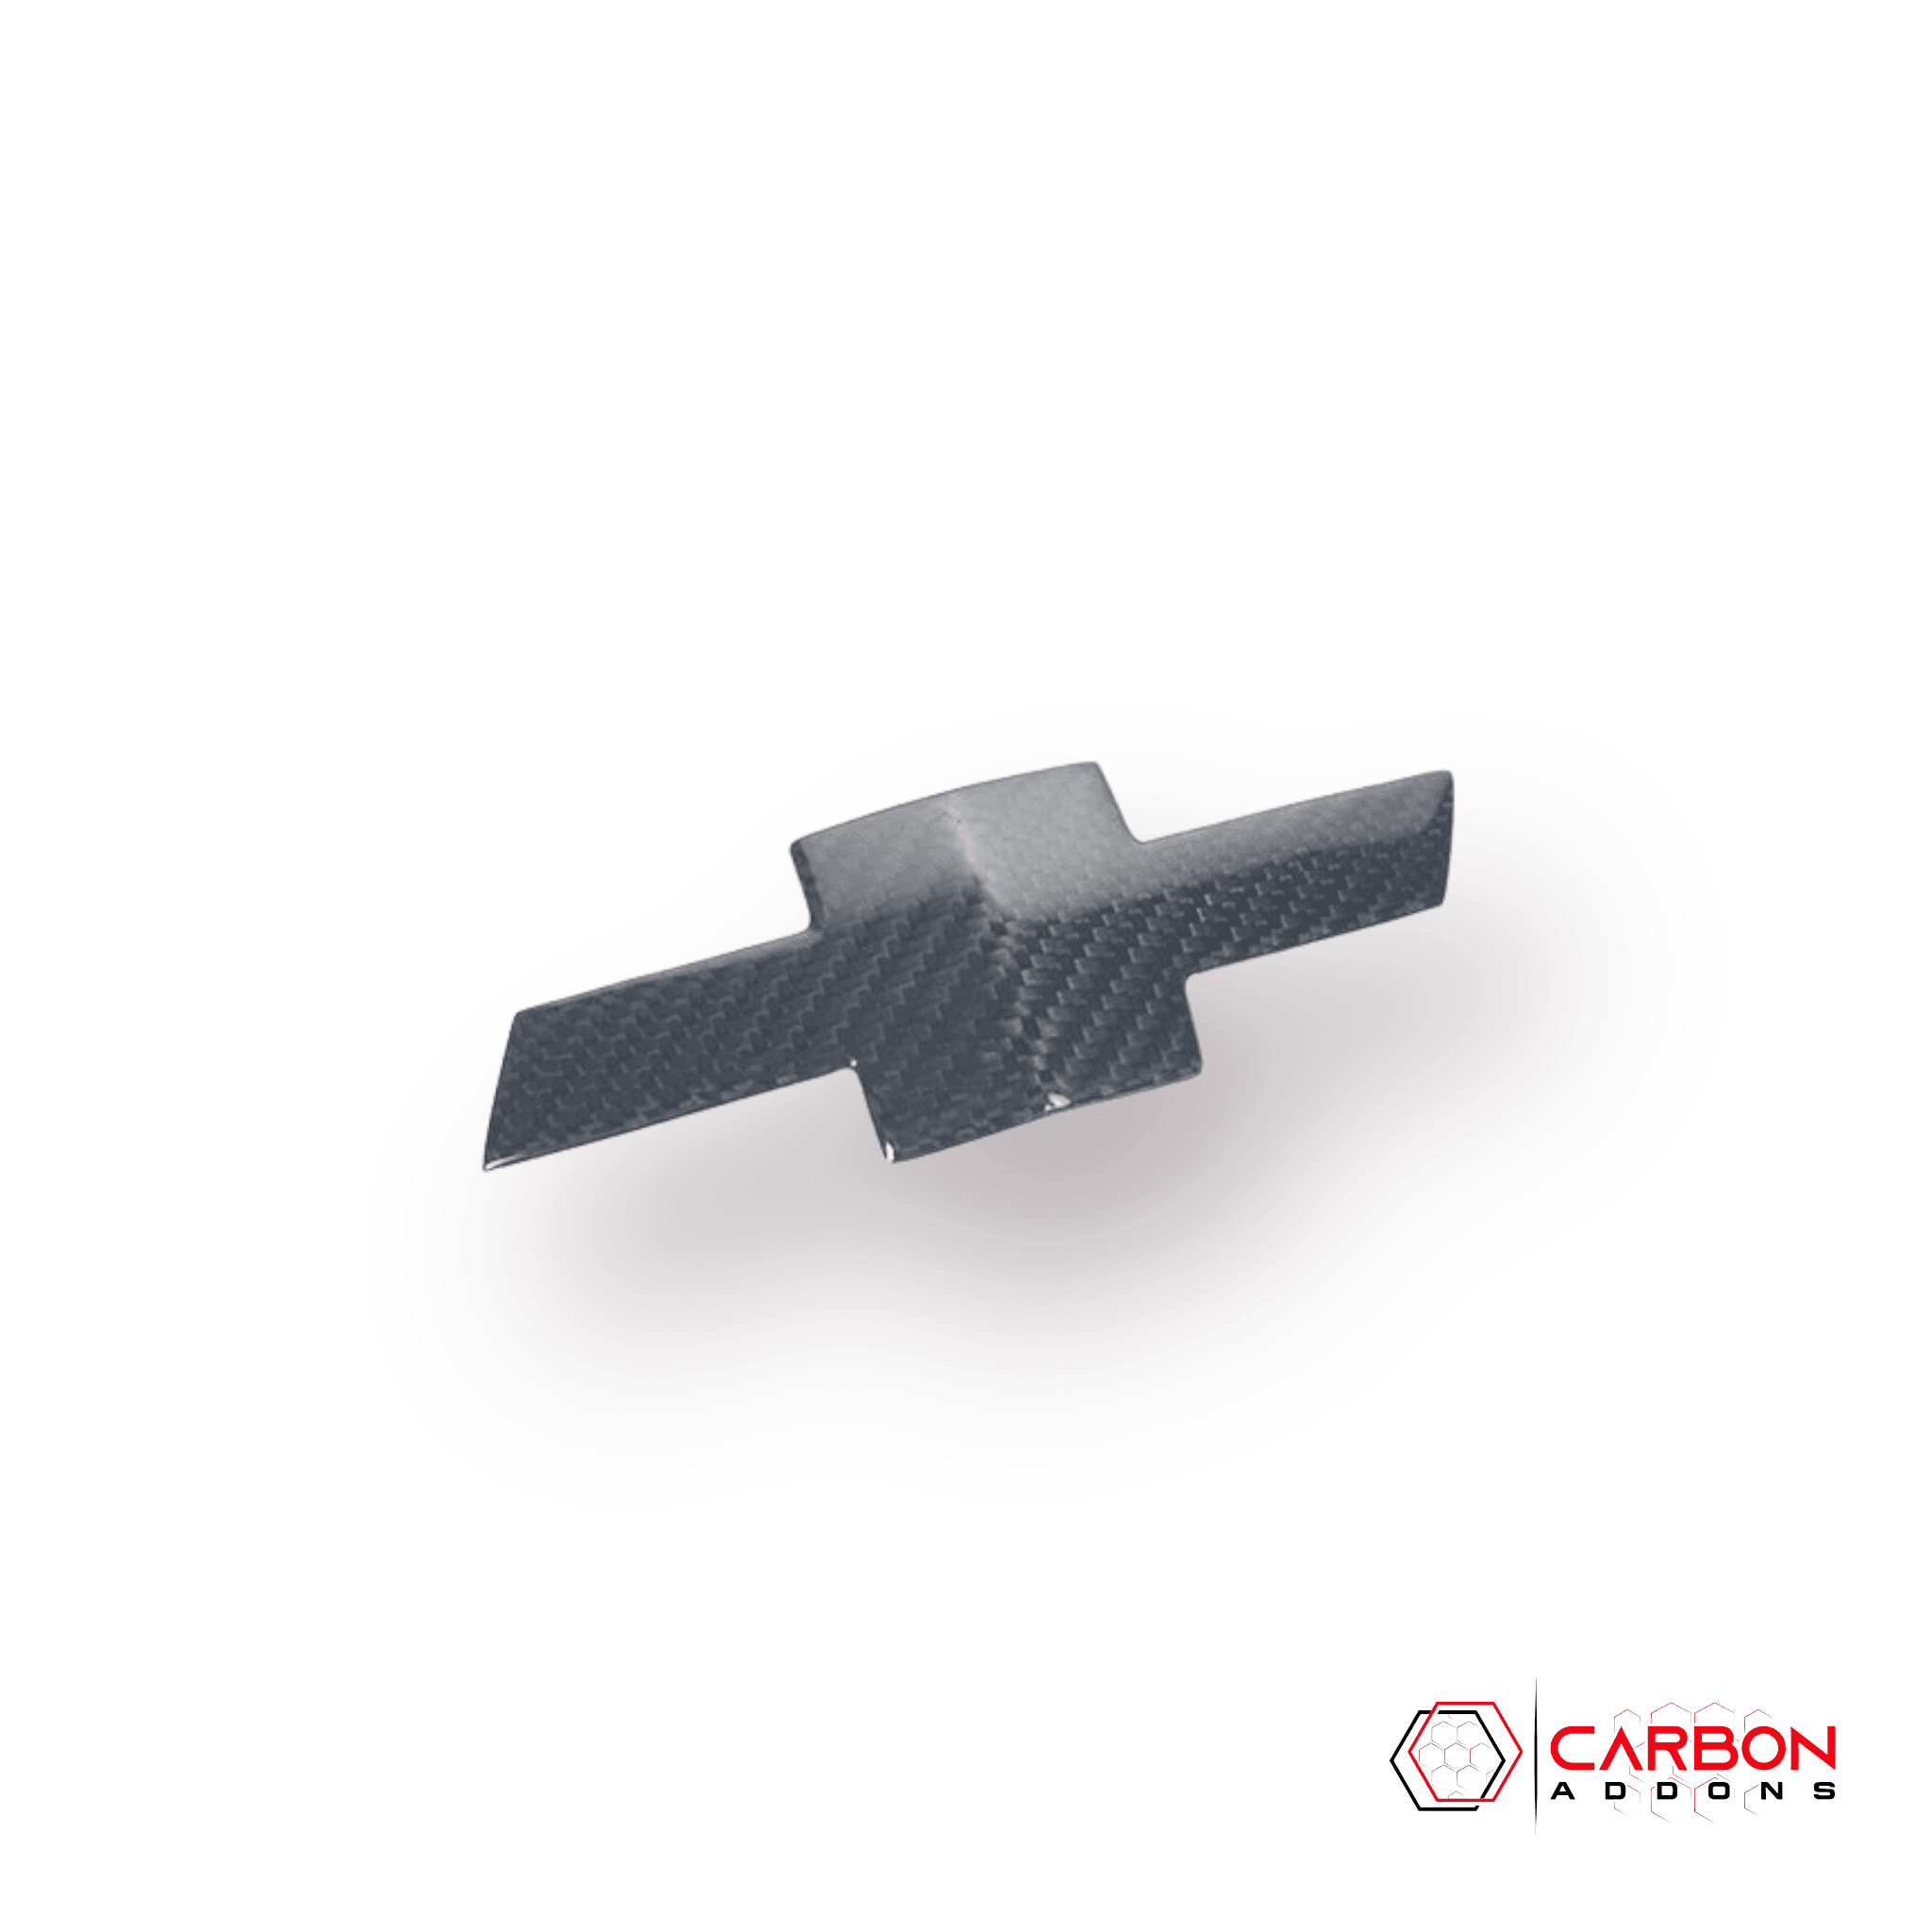 2016-2024 Camaro Carbon Fiber Exterior Bow tie Covers - carbonaddons Carbon Fiber Parts, Accessories, Upgrades, Mods